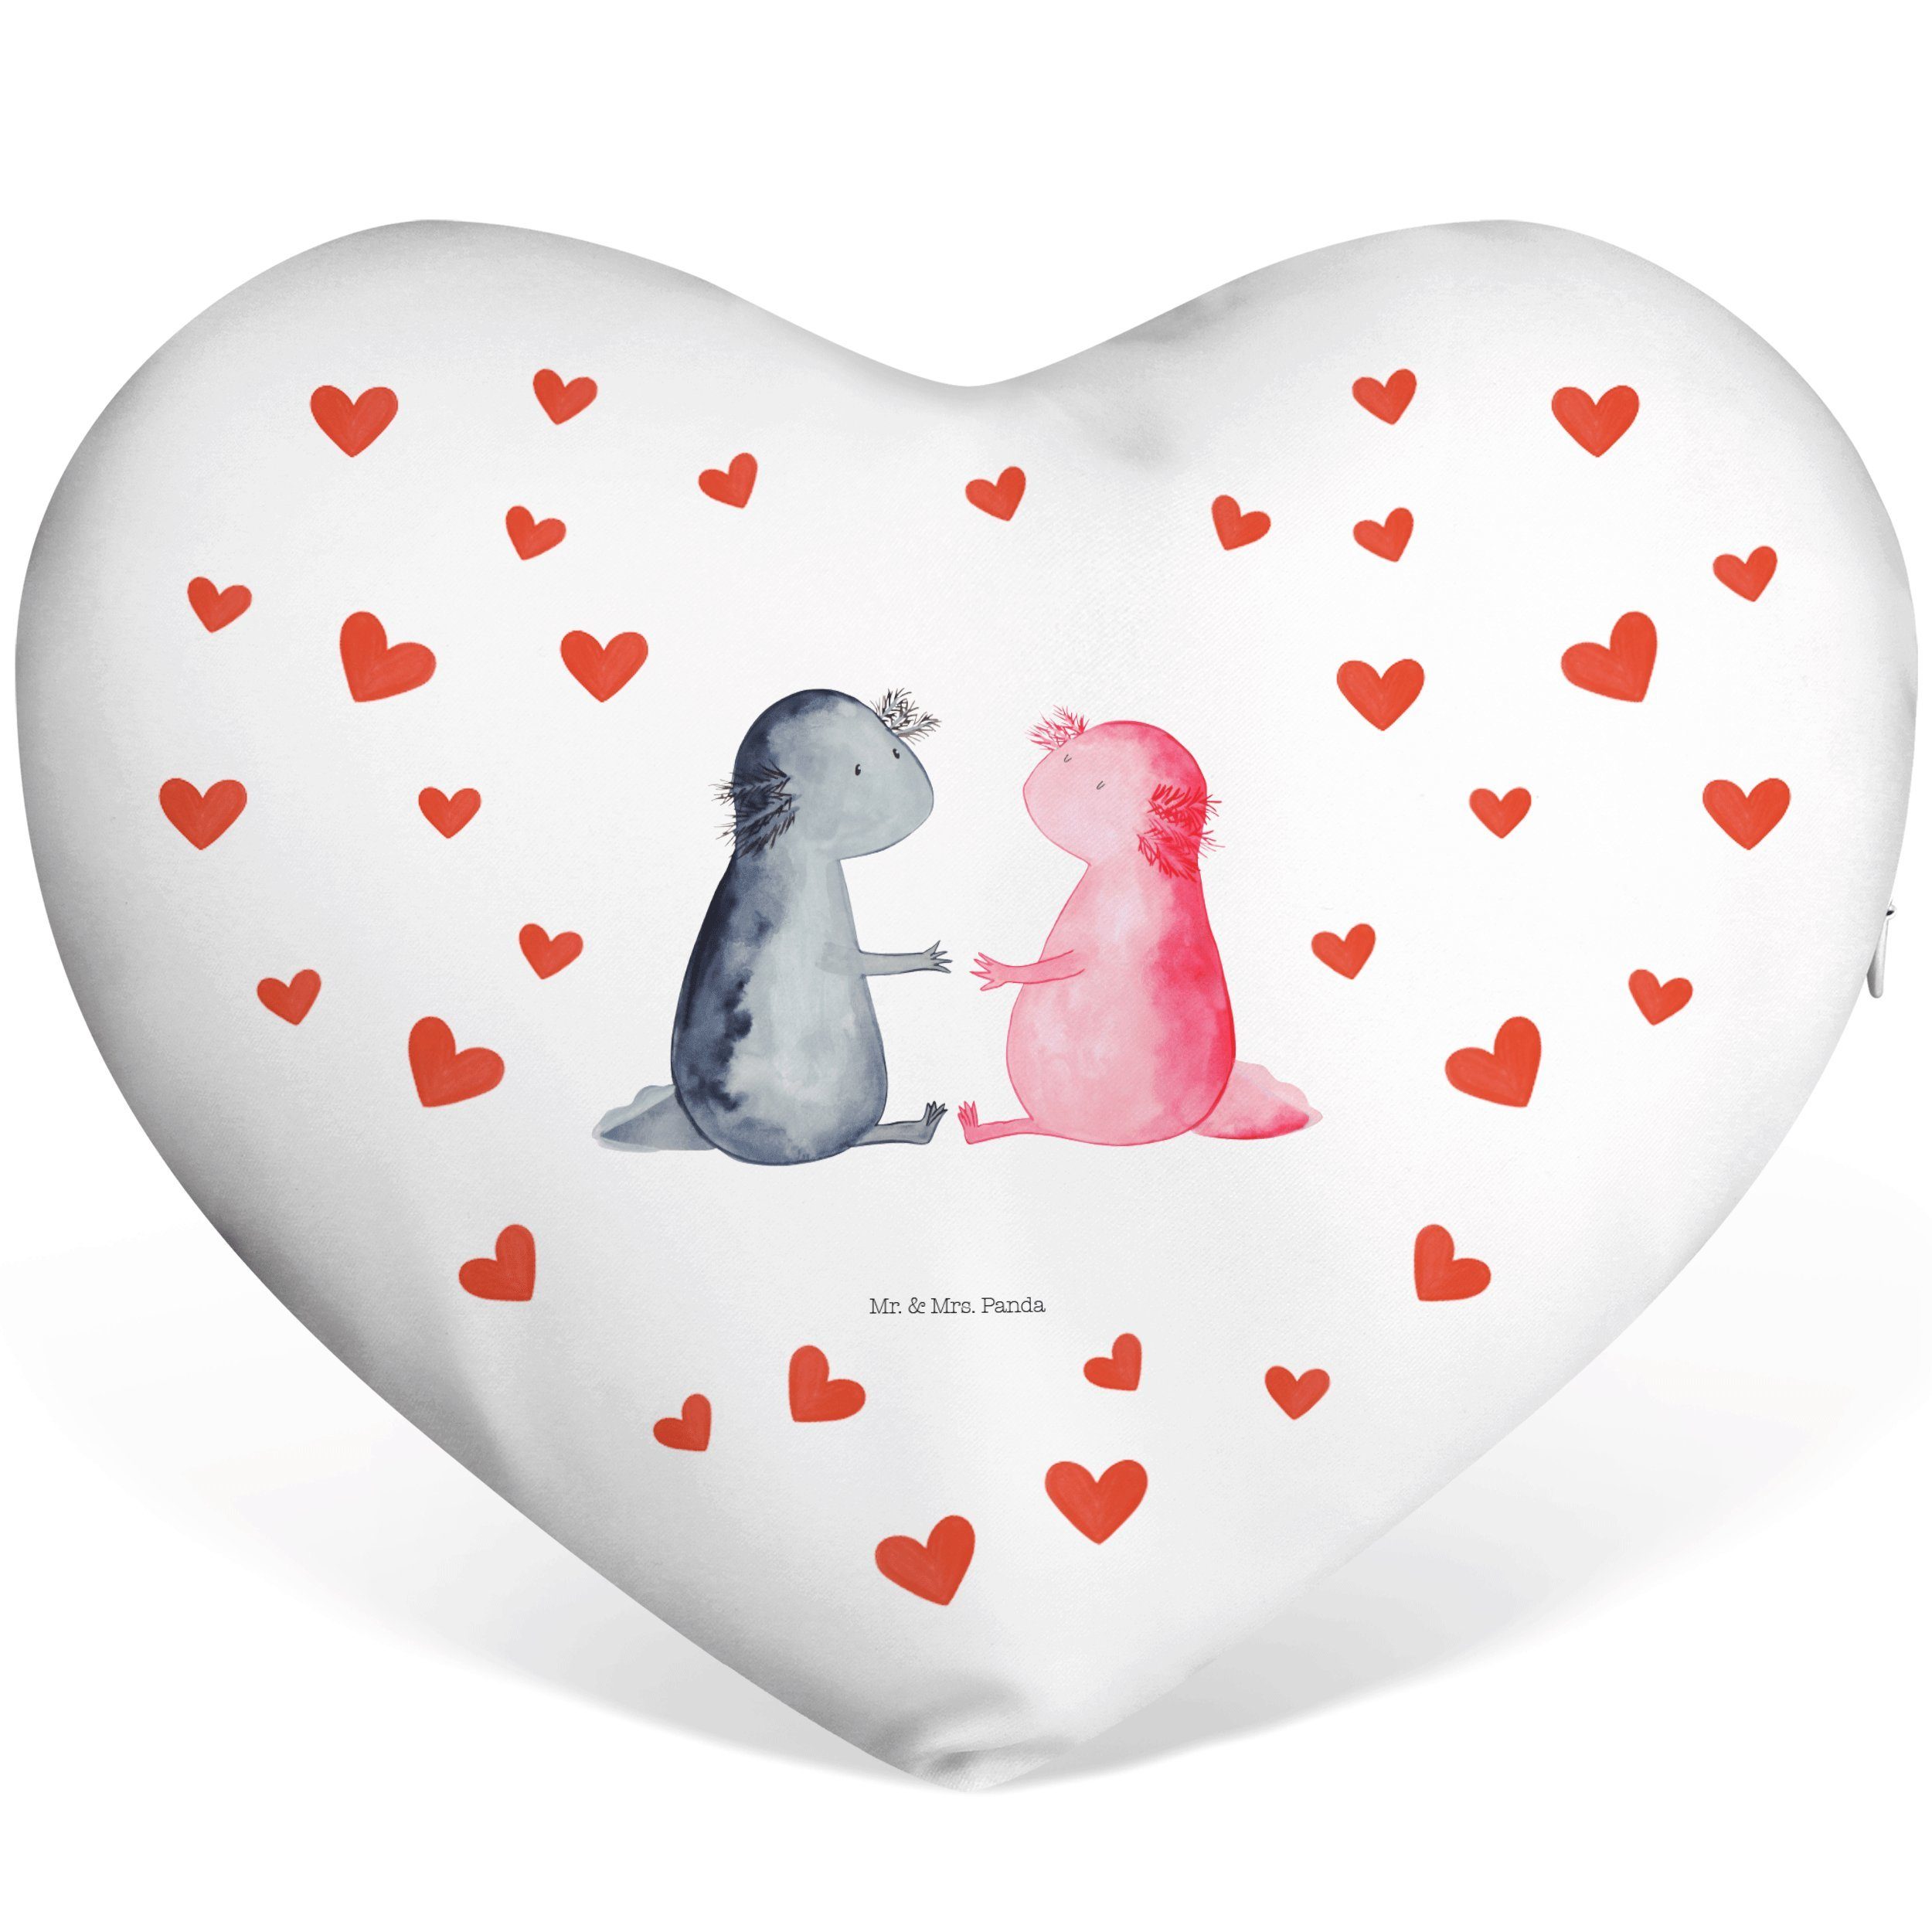 Mr. & Mrs. Panda Dekokissen Axolotl Liebe - Weiß - Geschenk, Kissen, Liebesbeweis, Herz, Herzform